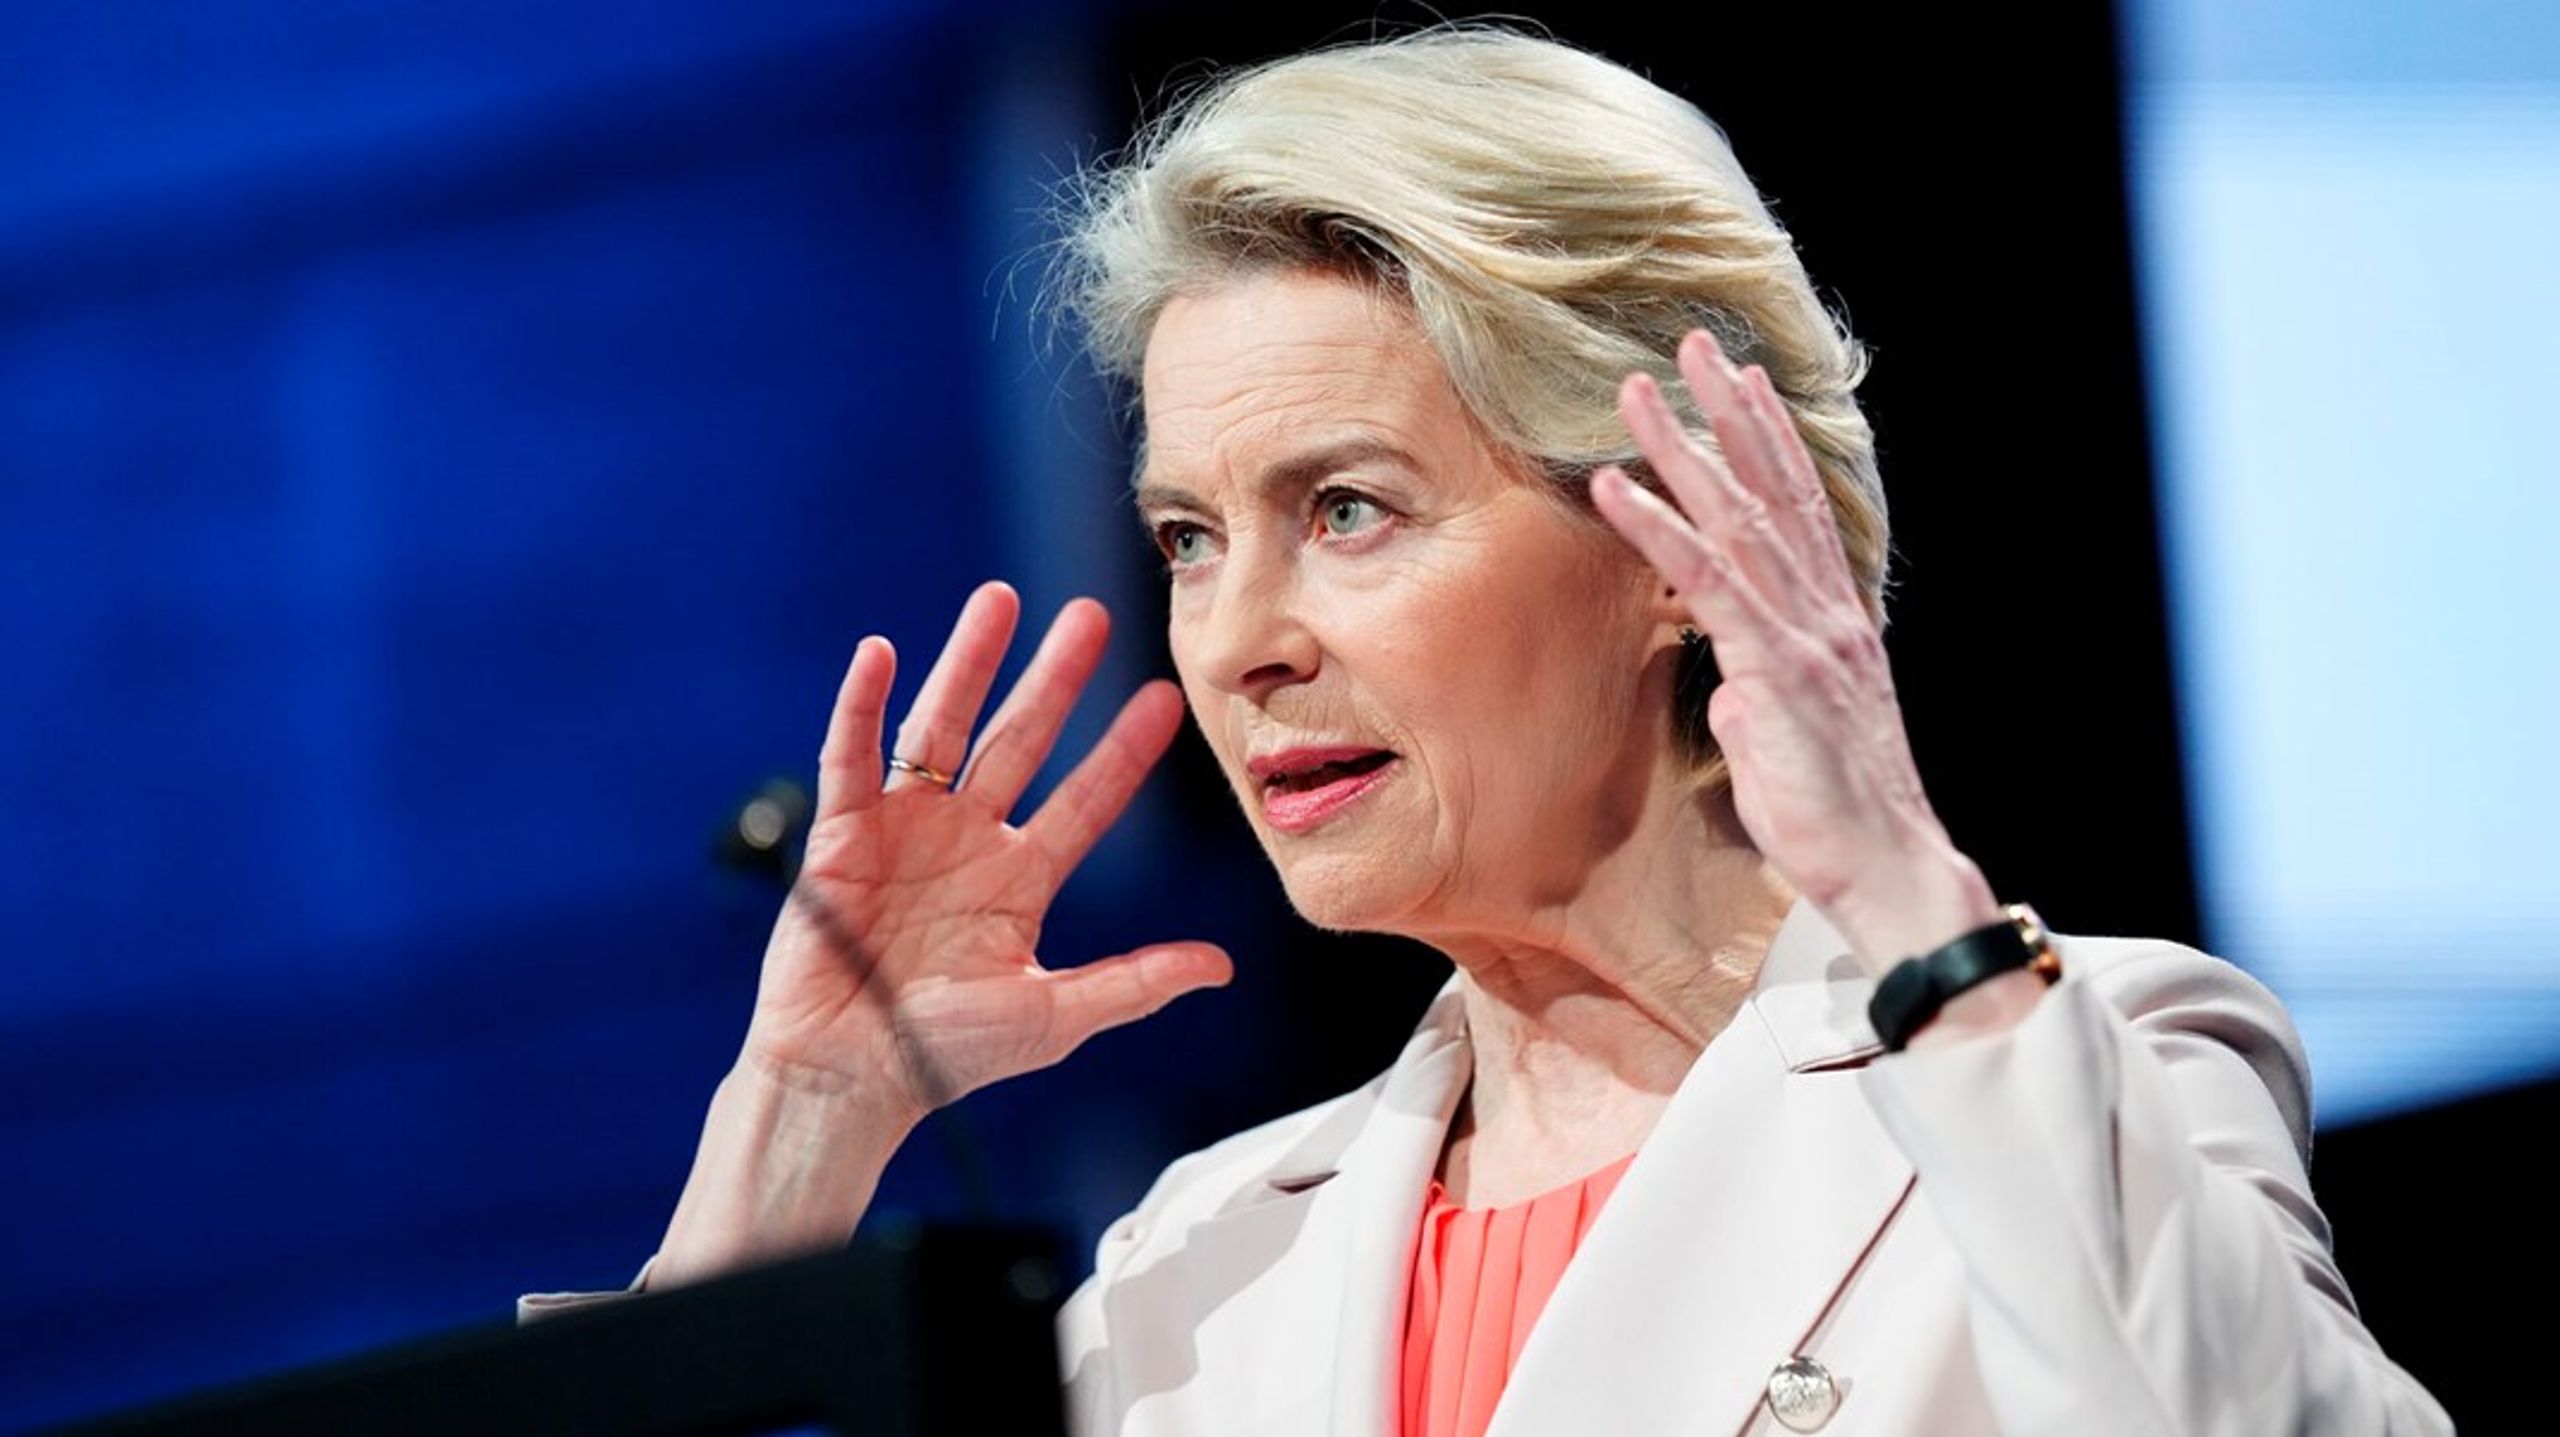 De europæiske demokratier er i fare, advarer EU-Kommissionens formand, Ursula von der Leyen. Hun var i Danmark tirsdag for at tale ved Copenhagen Democracy Summit.